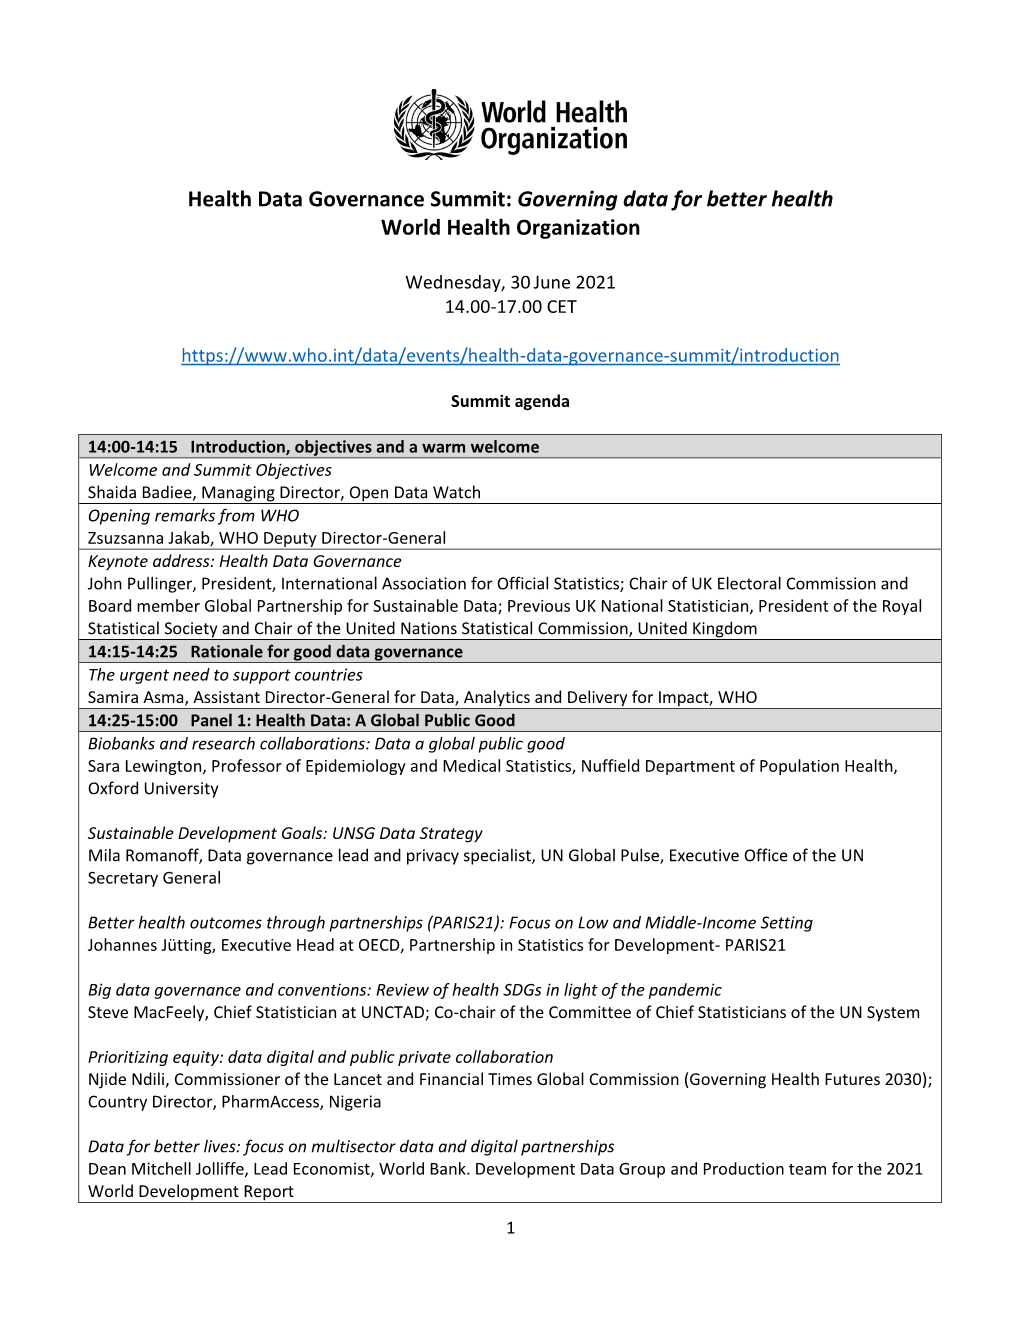 Health Data Governance Summit: Governing Data for Better Health World Health Organization